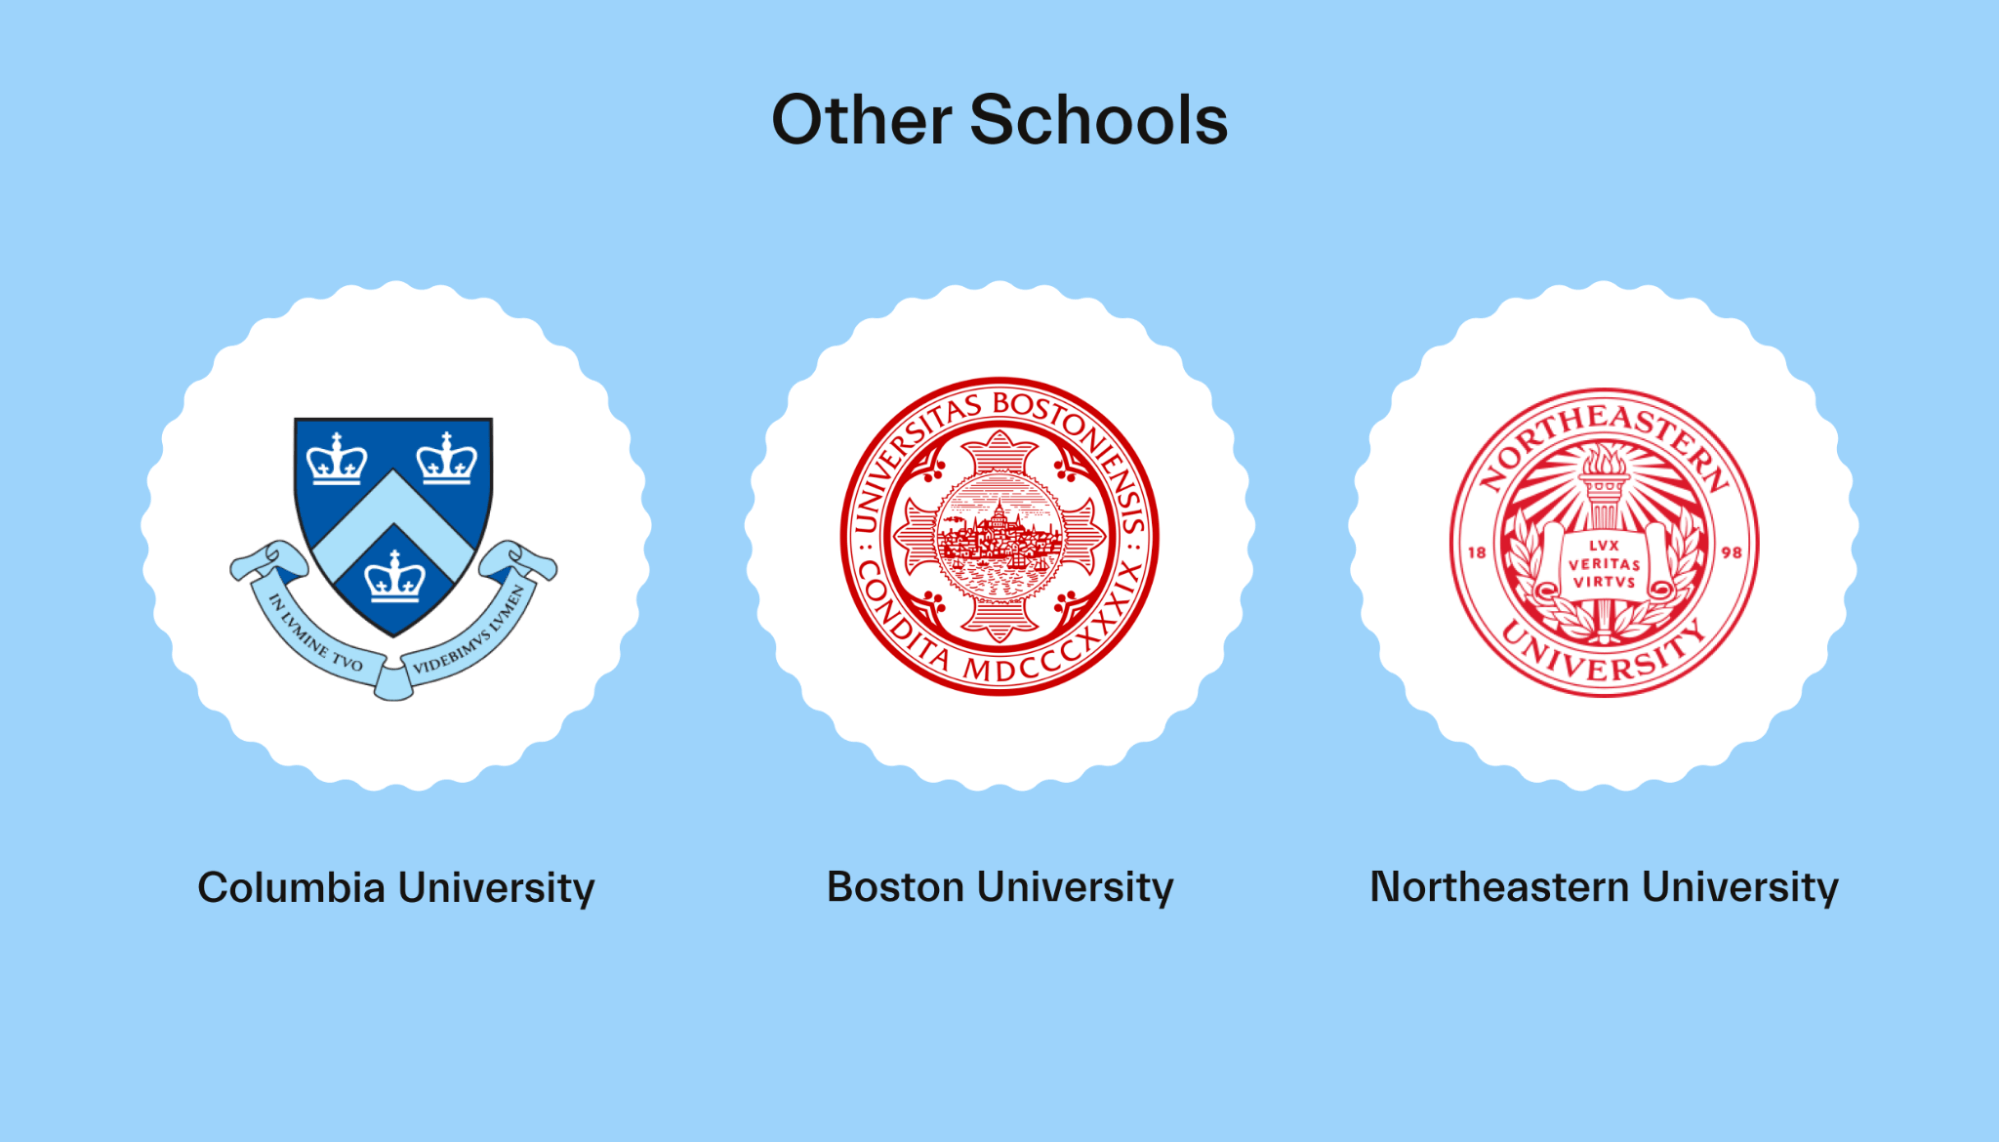 Other Schools